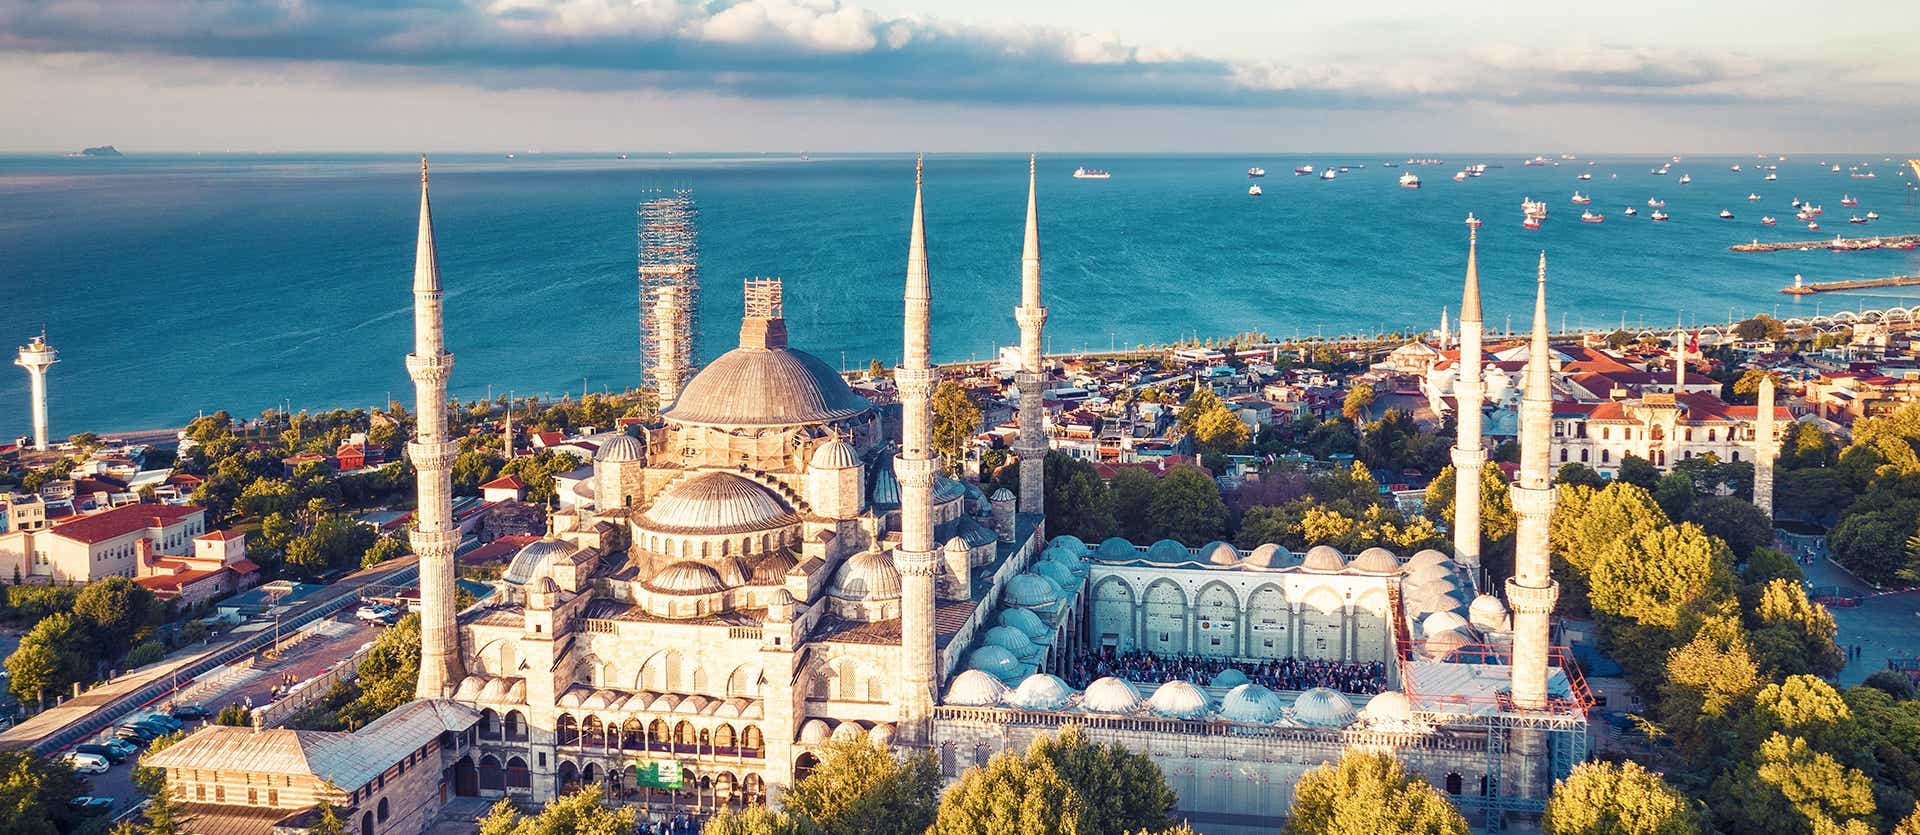 Mezquita Azul <span class="iconos separador"></span> Estambul <span class="iconos separador"></span> Turkey